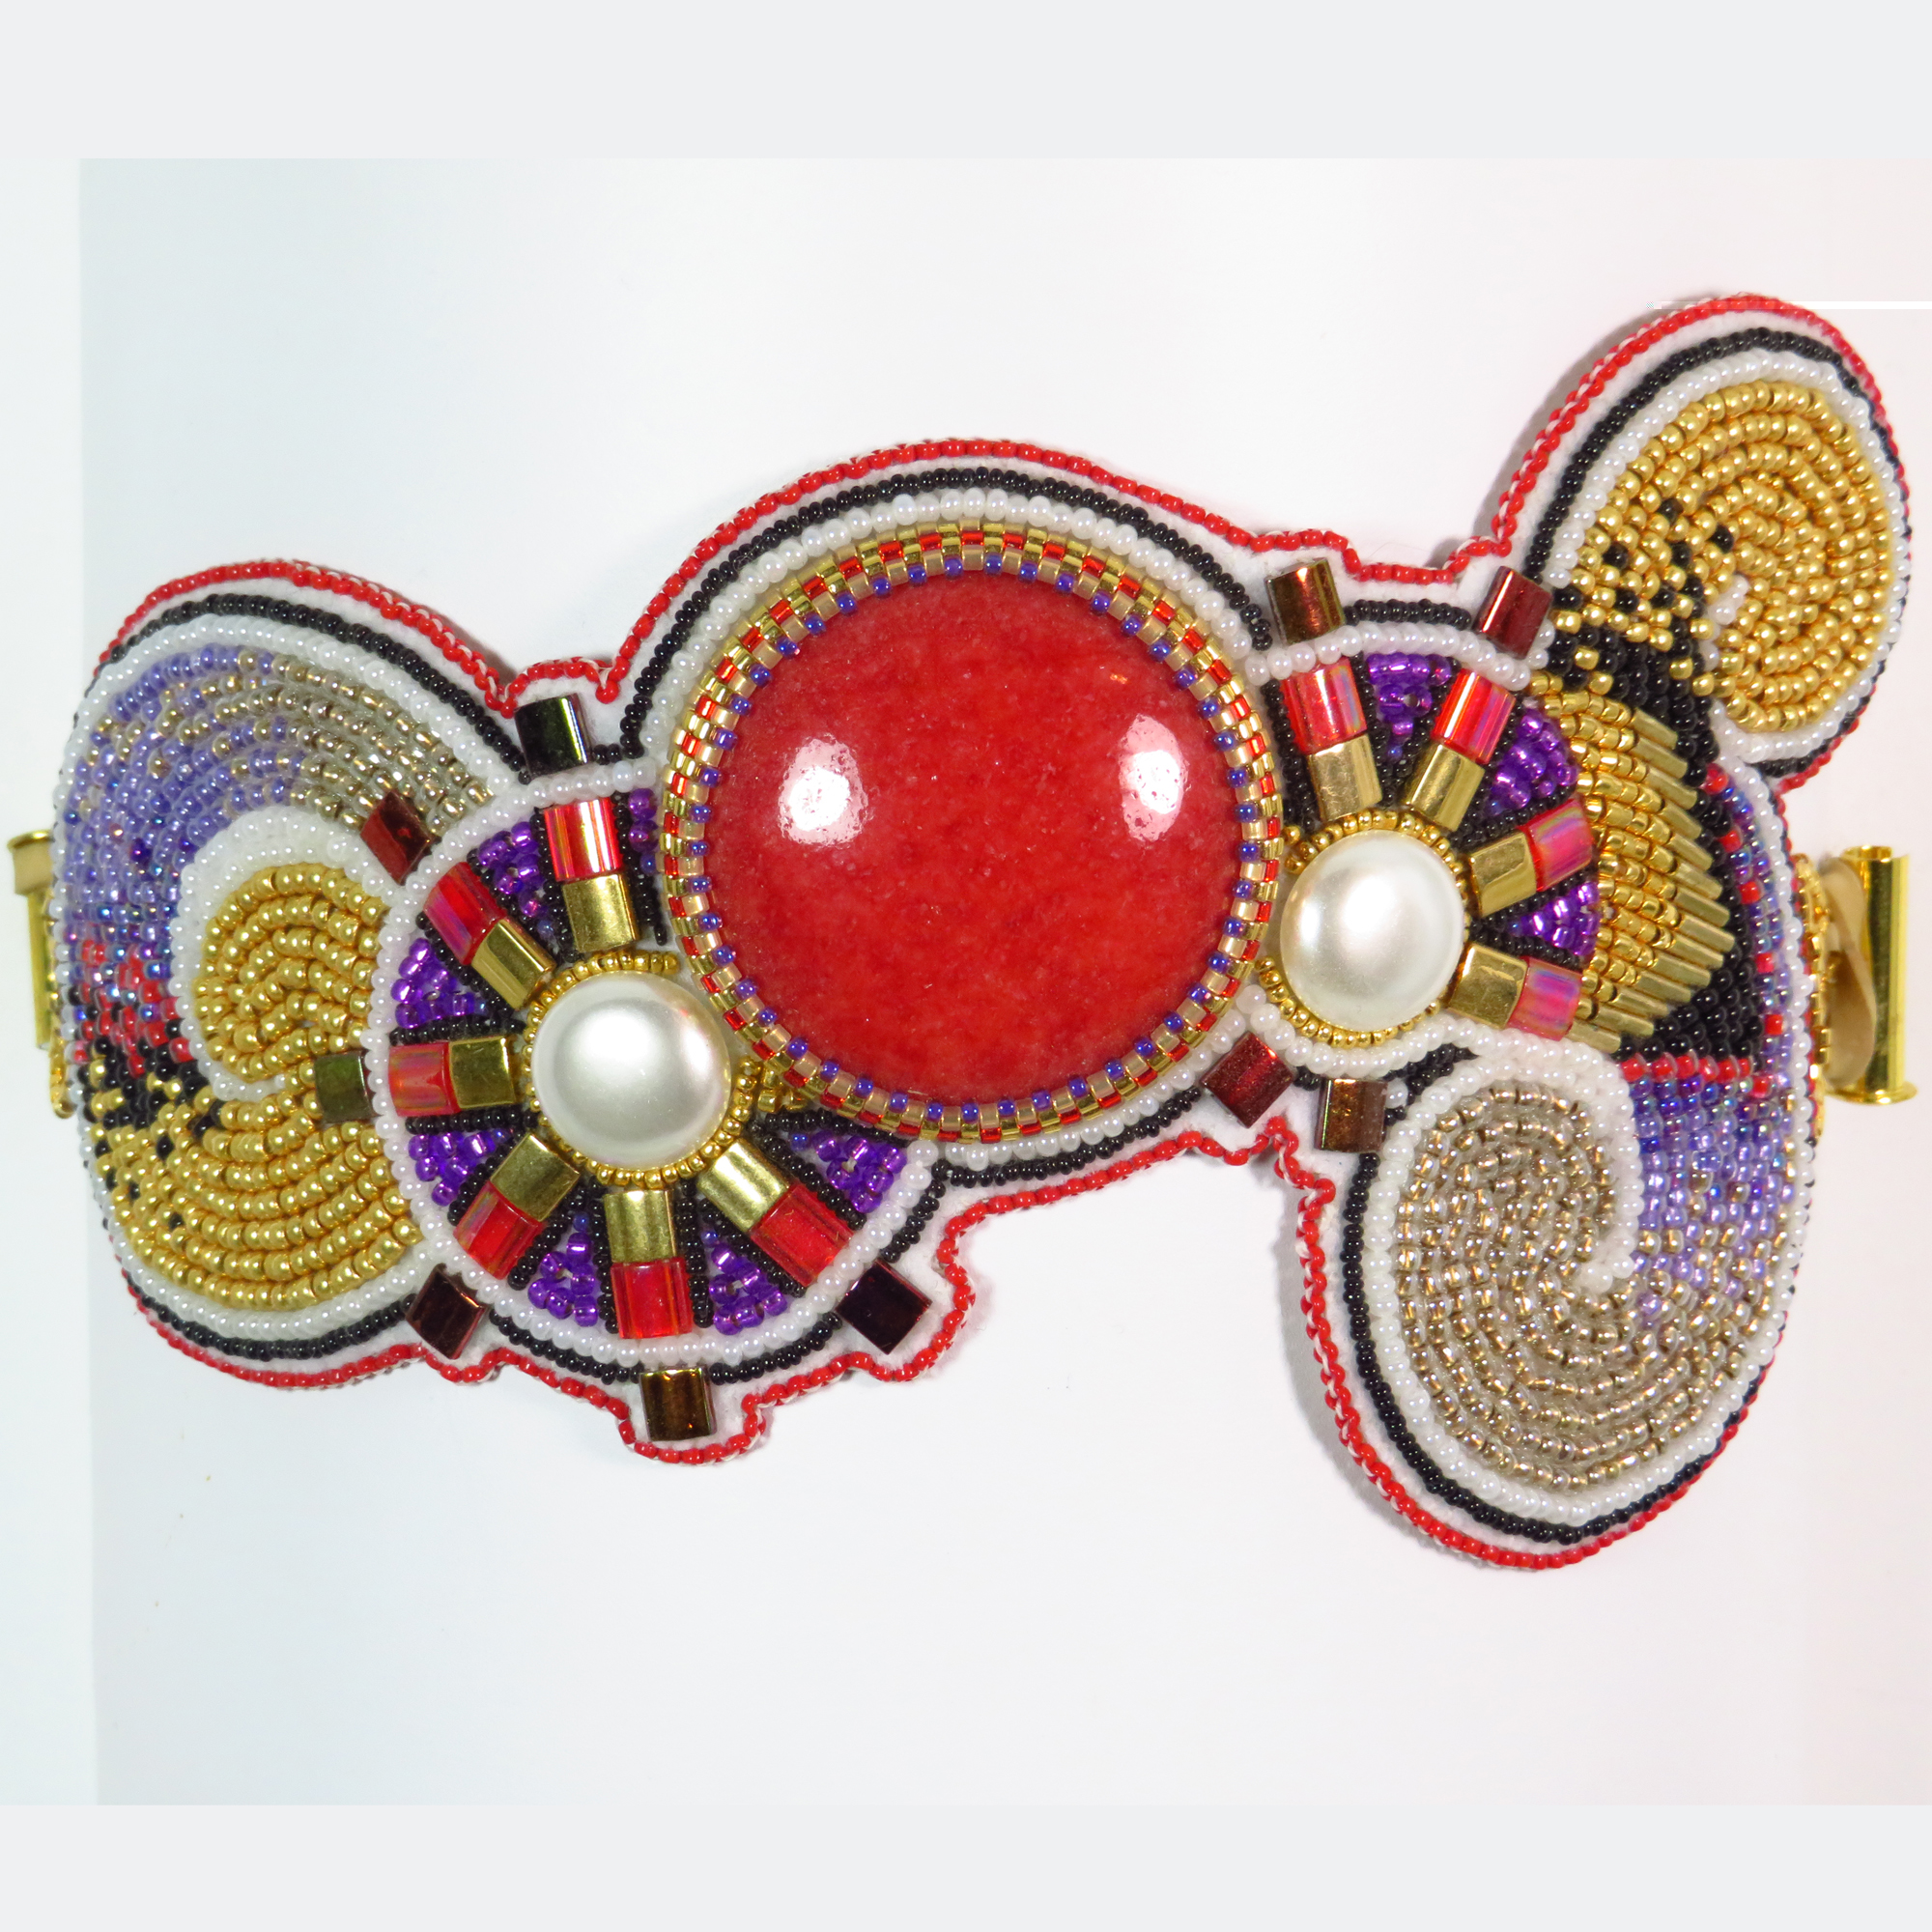 Red gold black purple spirals bead embroidered bracelet by Bonnie Van Hall